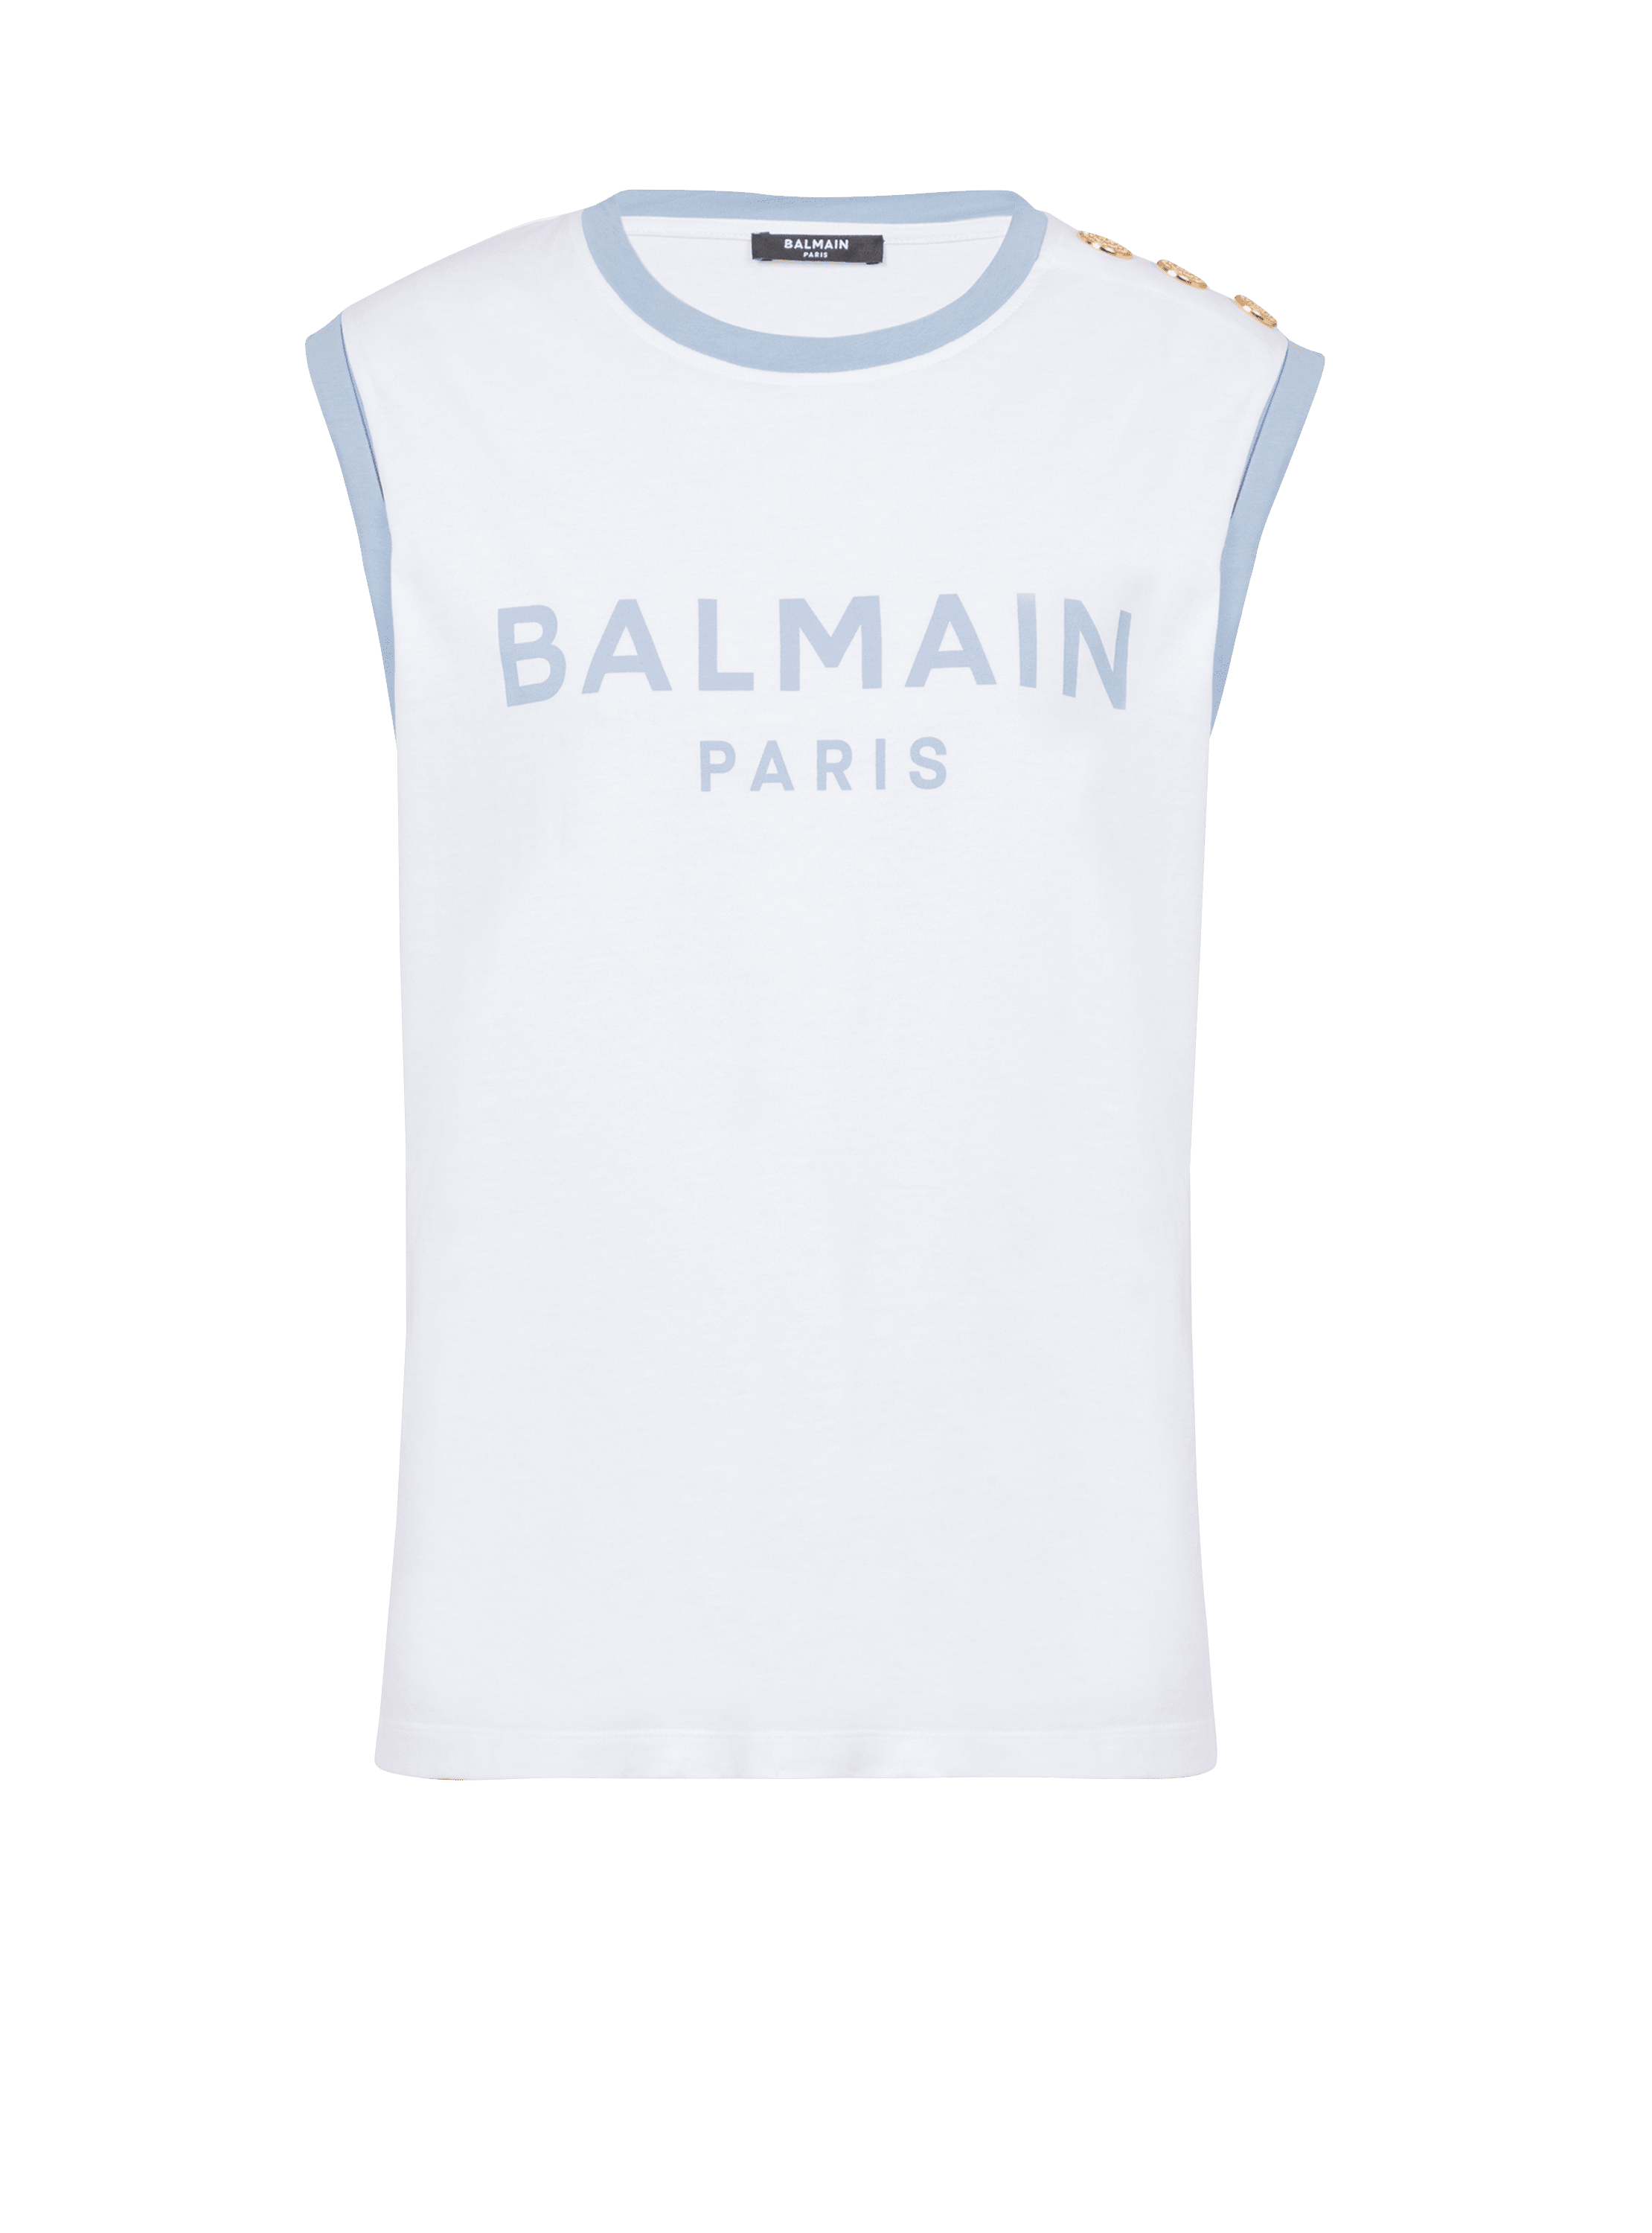 Balmain Paris 3-button tank top